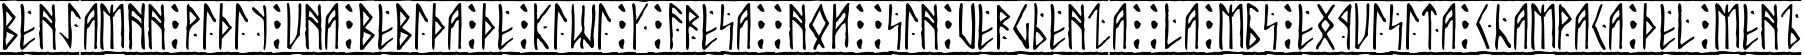 Пример написания шрифтом Runic текста на испанском